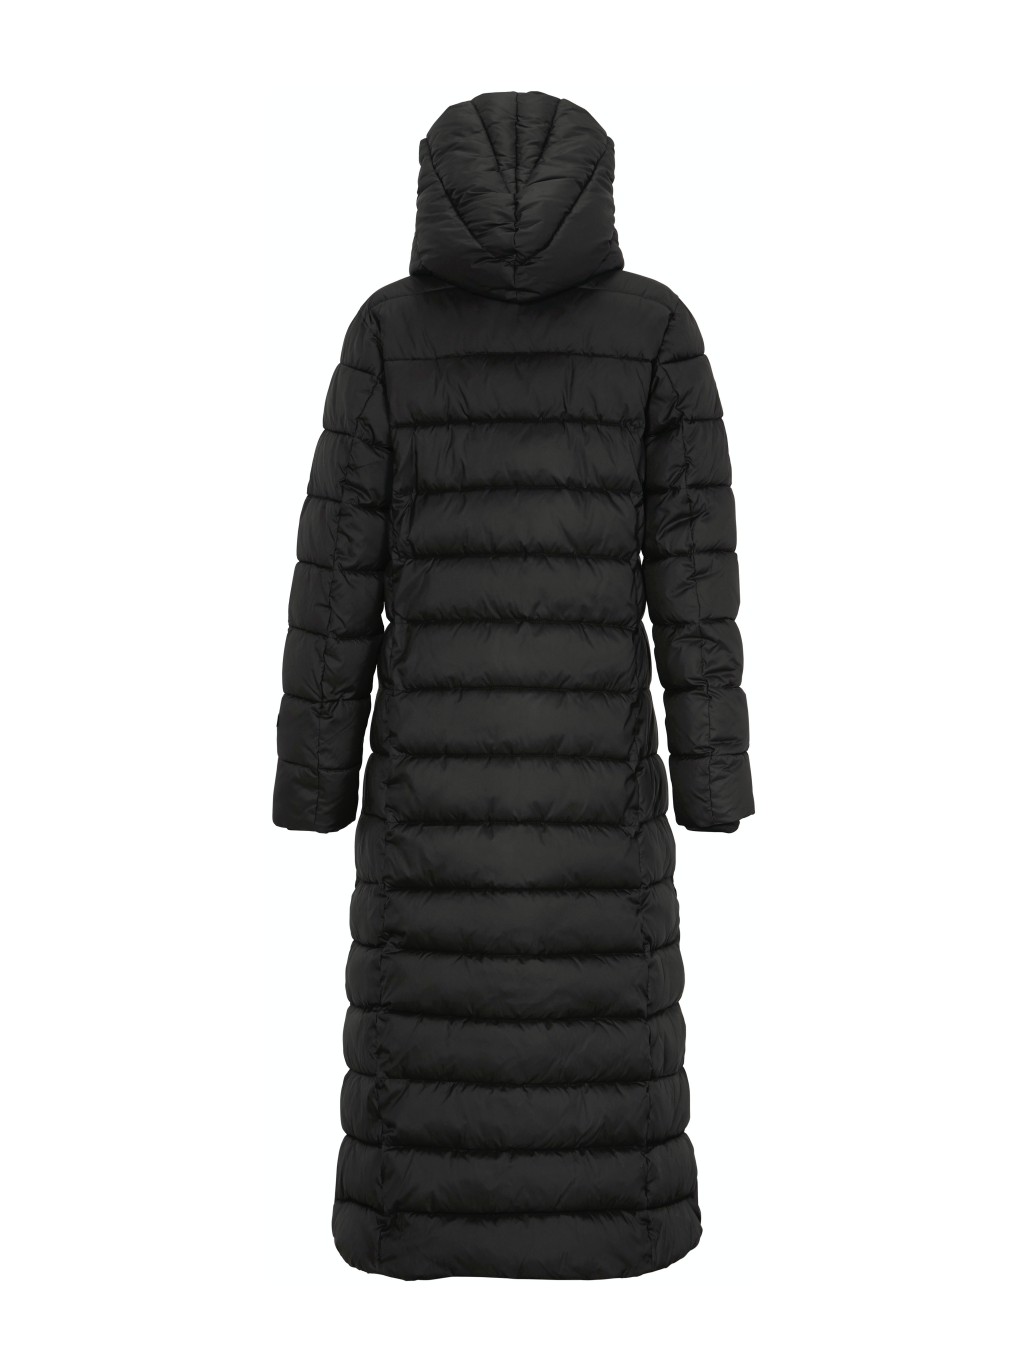 The Ultimate Black Winter Coat Wishlist